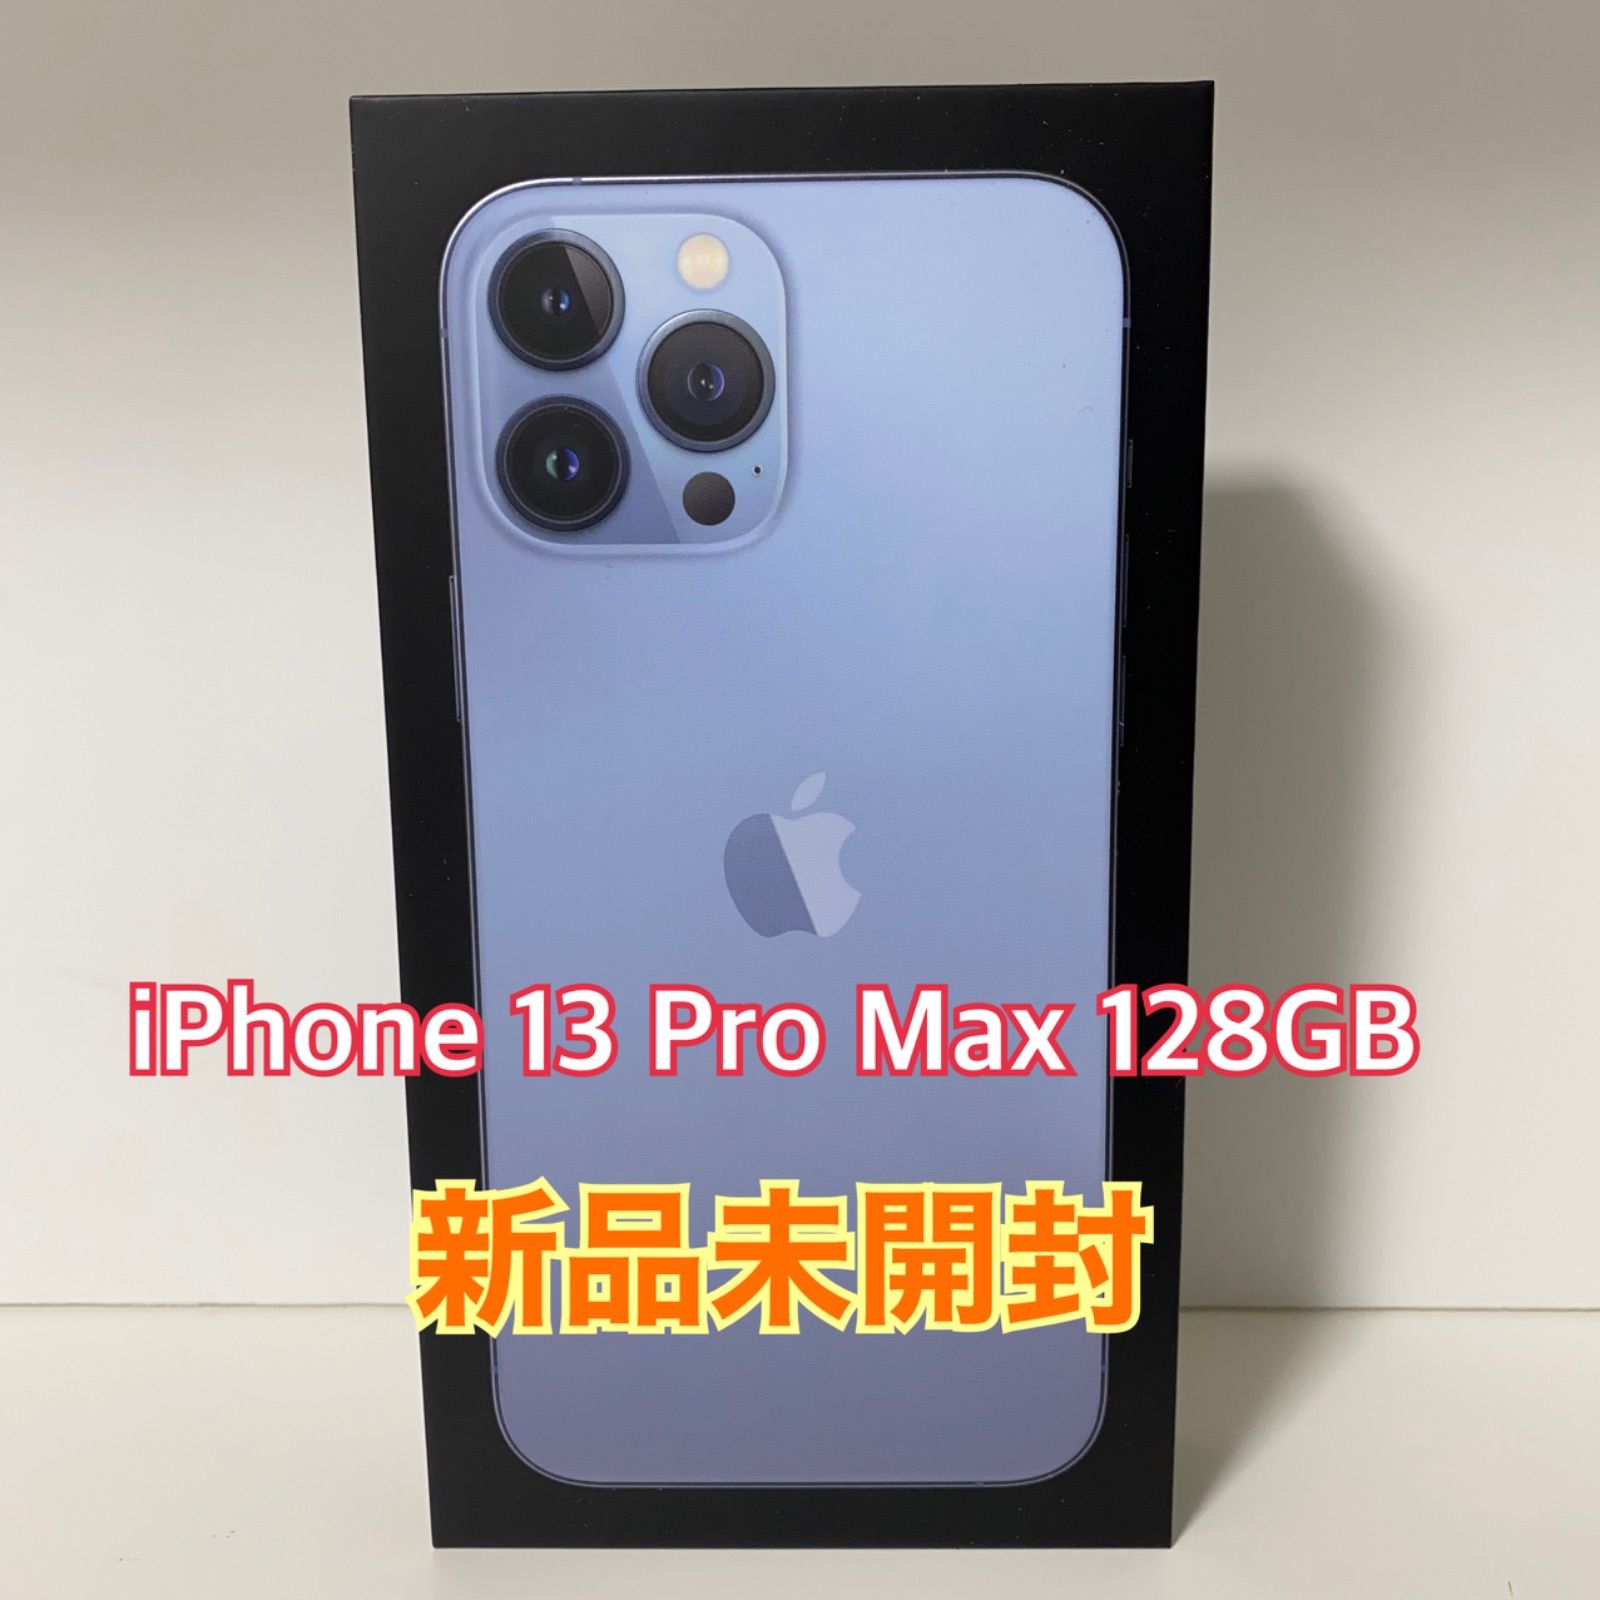 iPhone 13 Pro Max 128GB シエルブルー SIMフリー 本体 - メルカリ